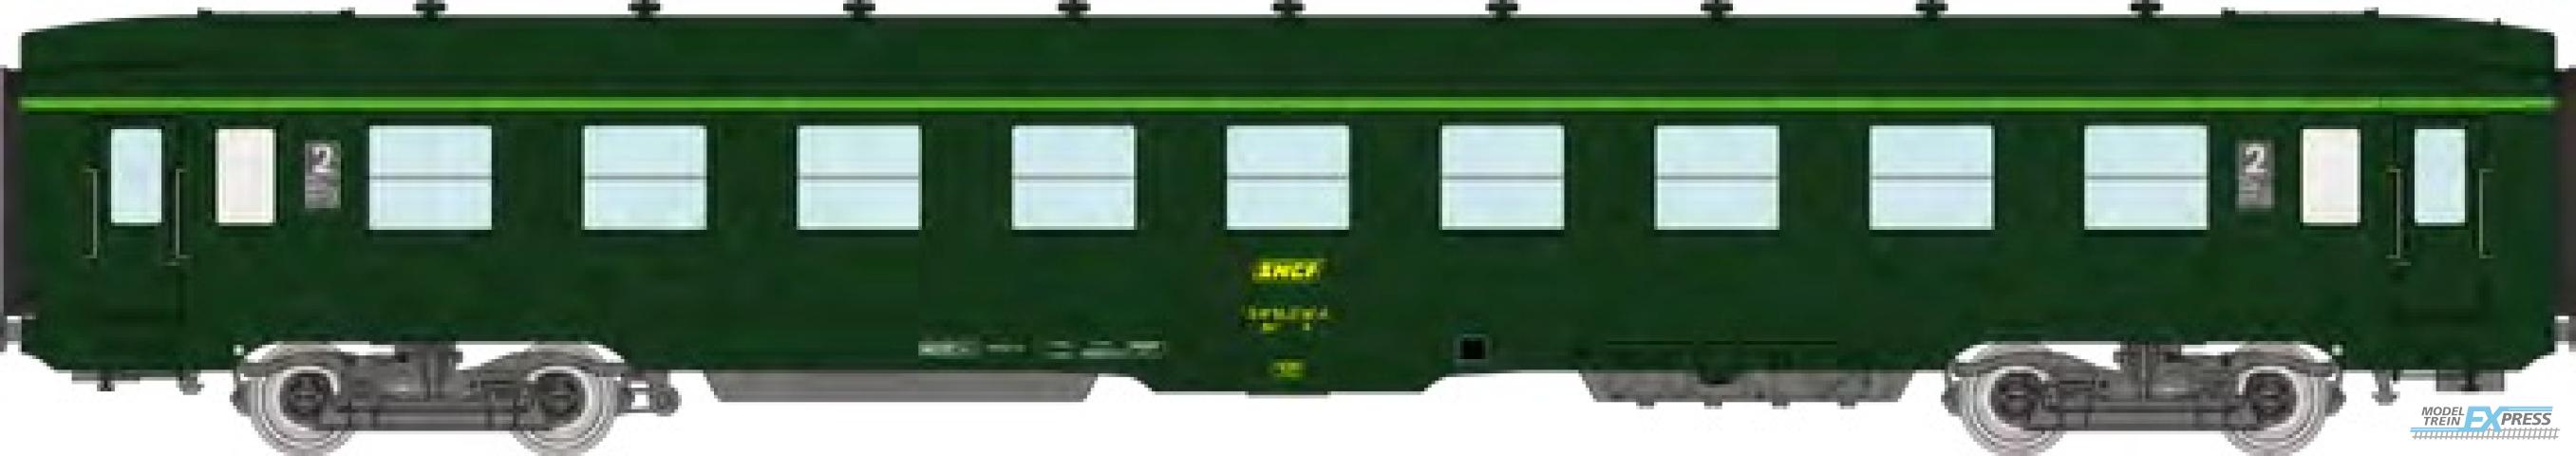 REE models VB-408 U52 DEV AO Sleeping Cars B9c9 N° 51 87 59-37 147-0 Green 301, boxed SNCF logo Era IV-V